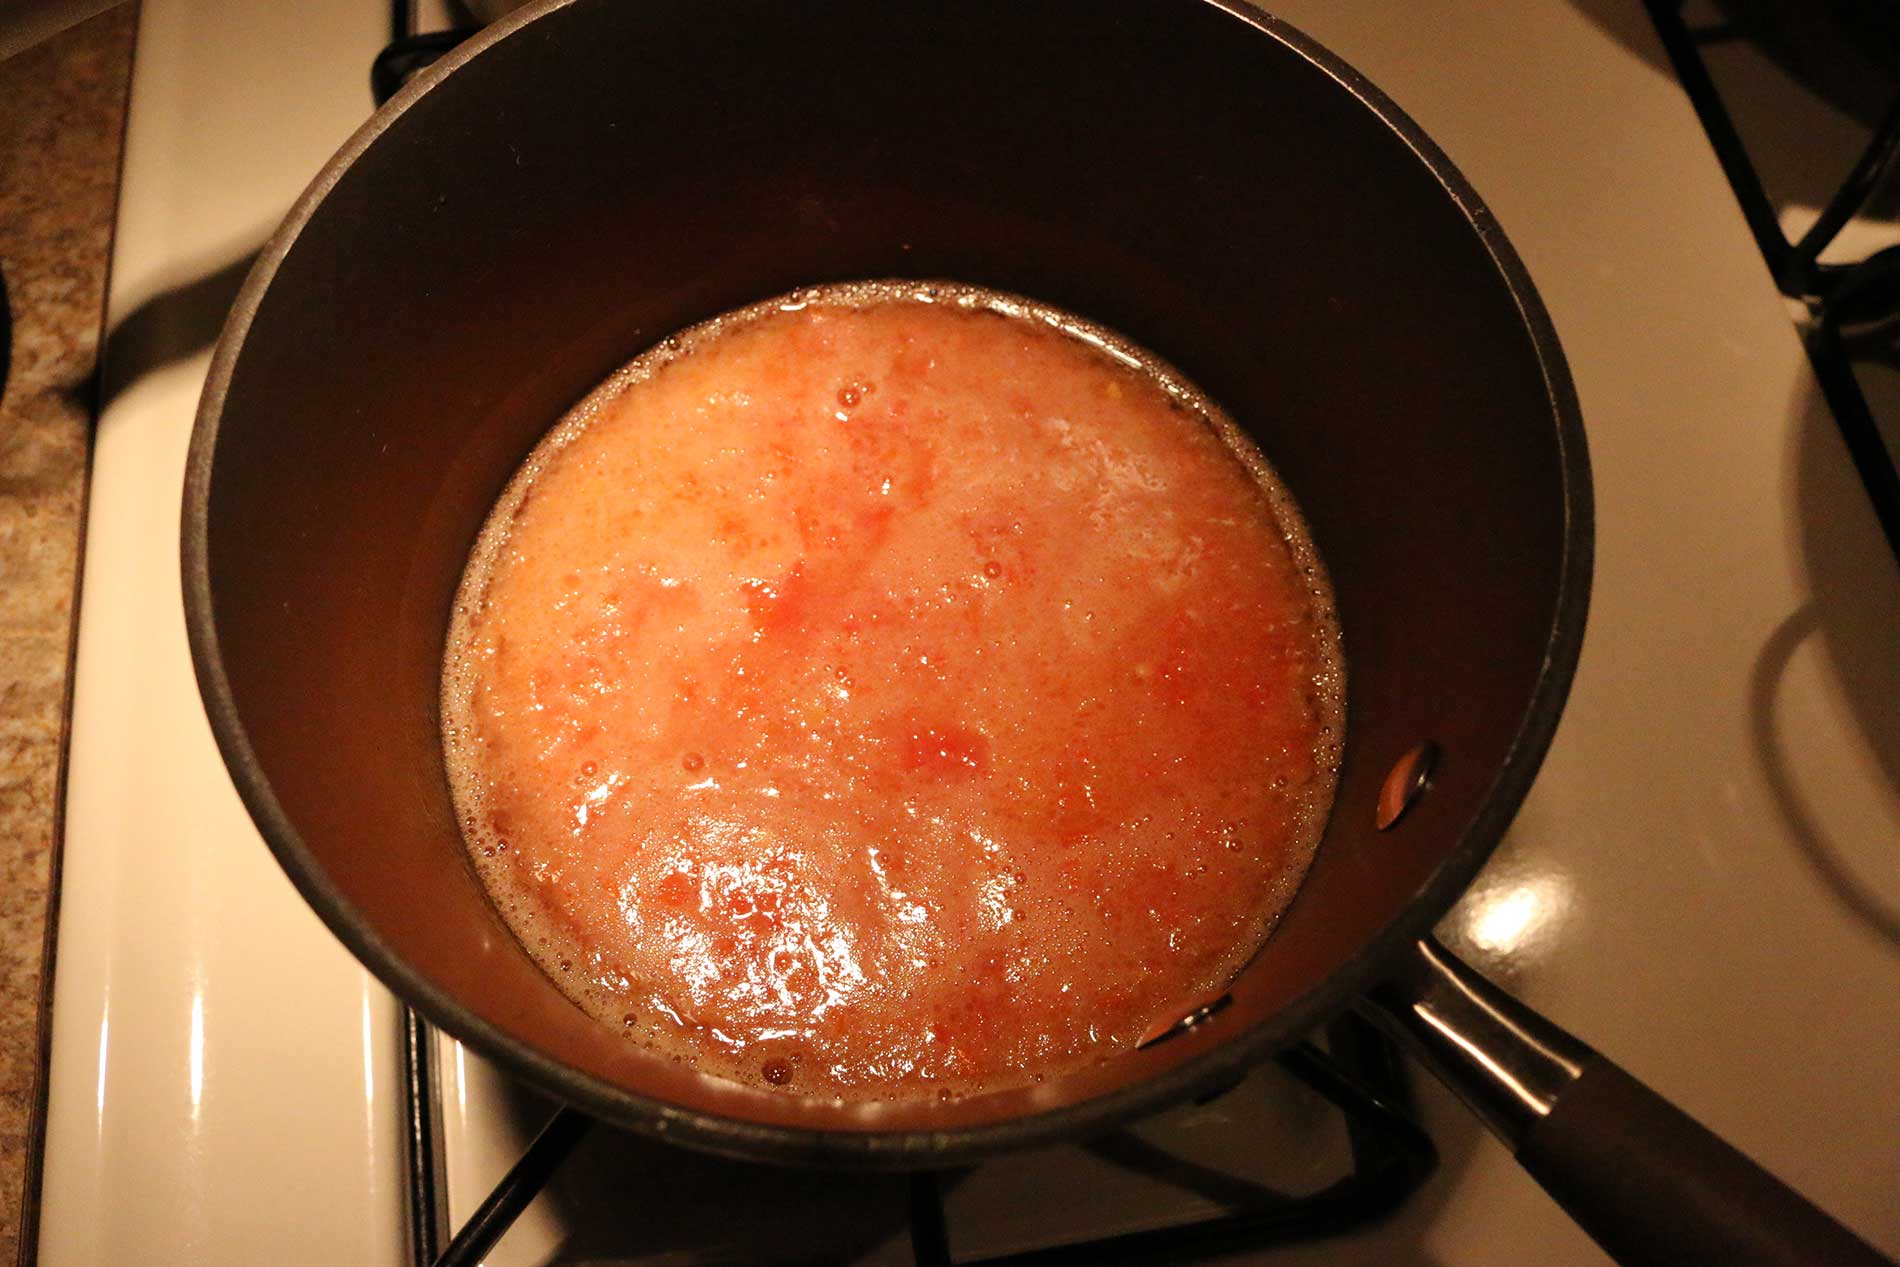 Rice and tomato mixture